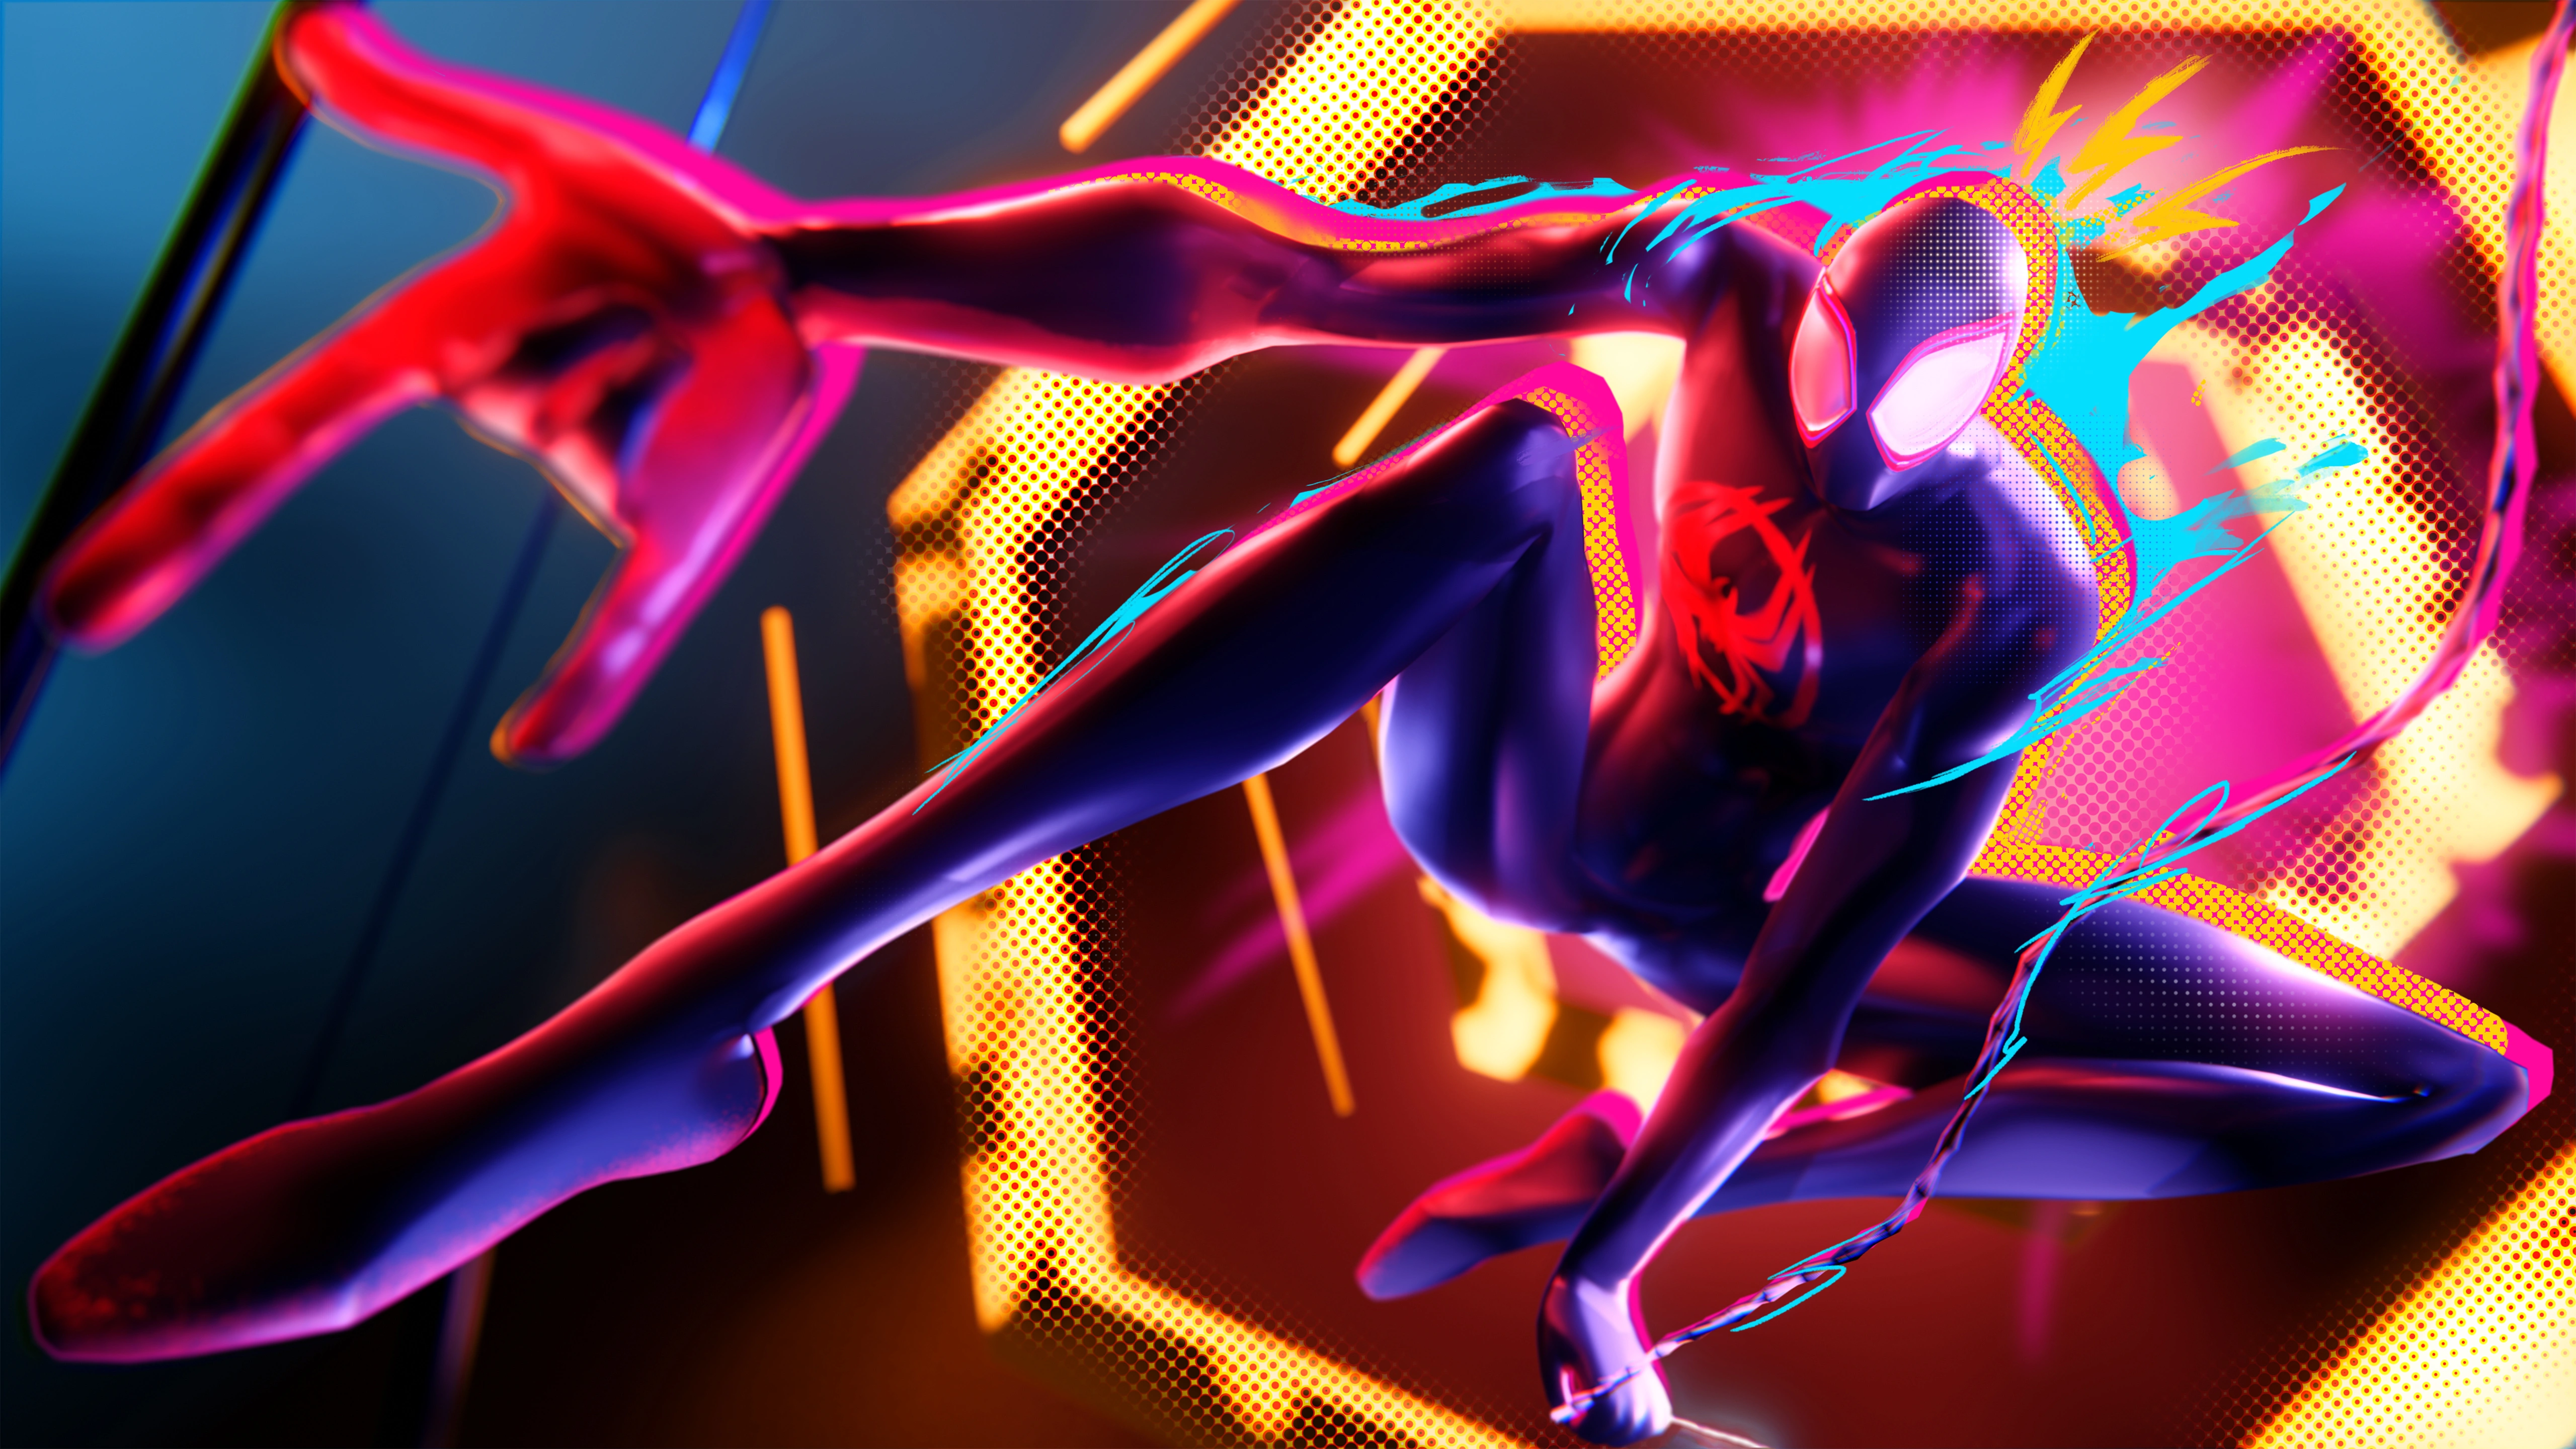 spiderman into spiderverse in fortnite 5k qc.jpg